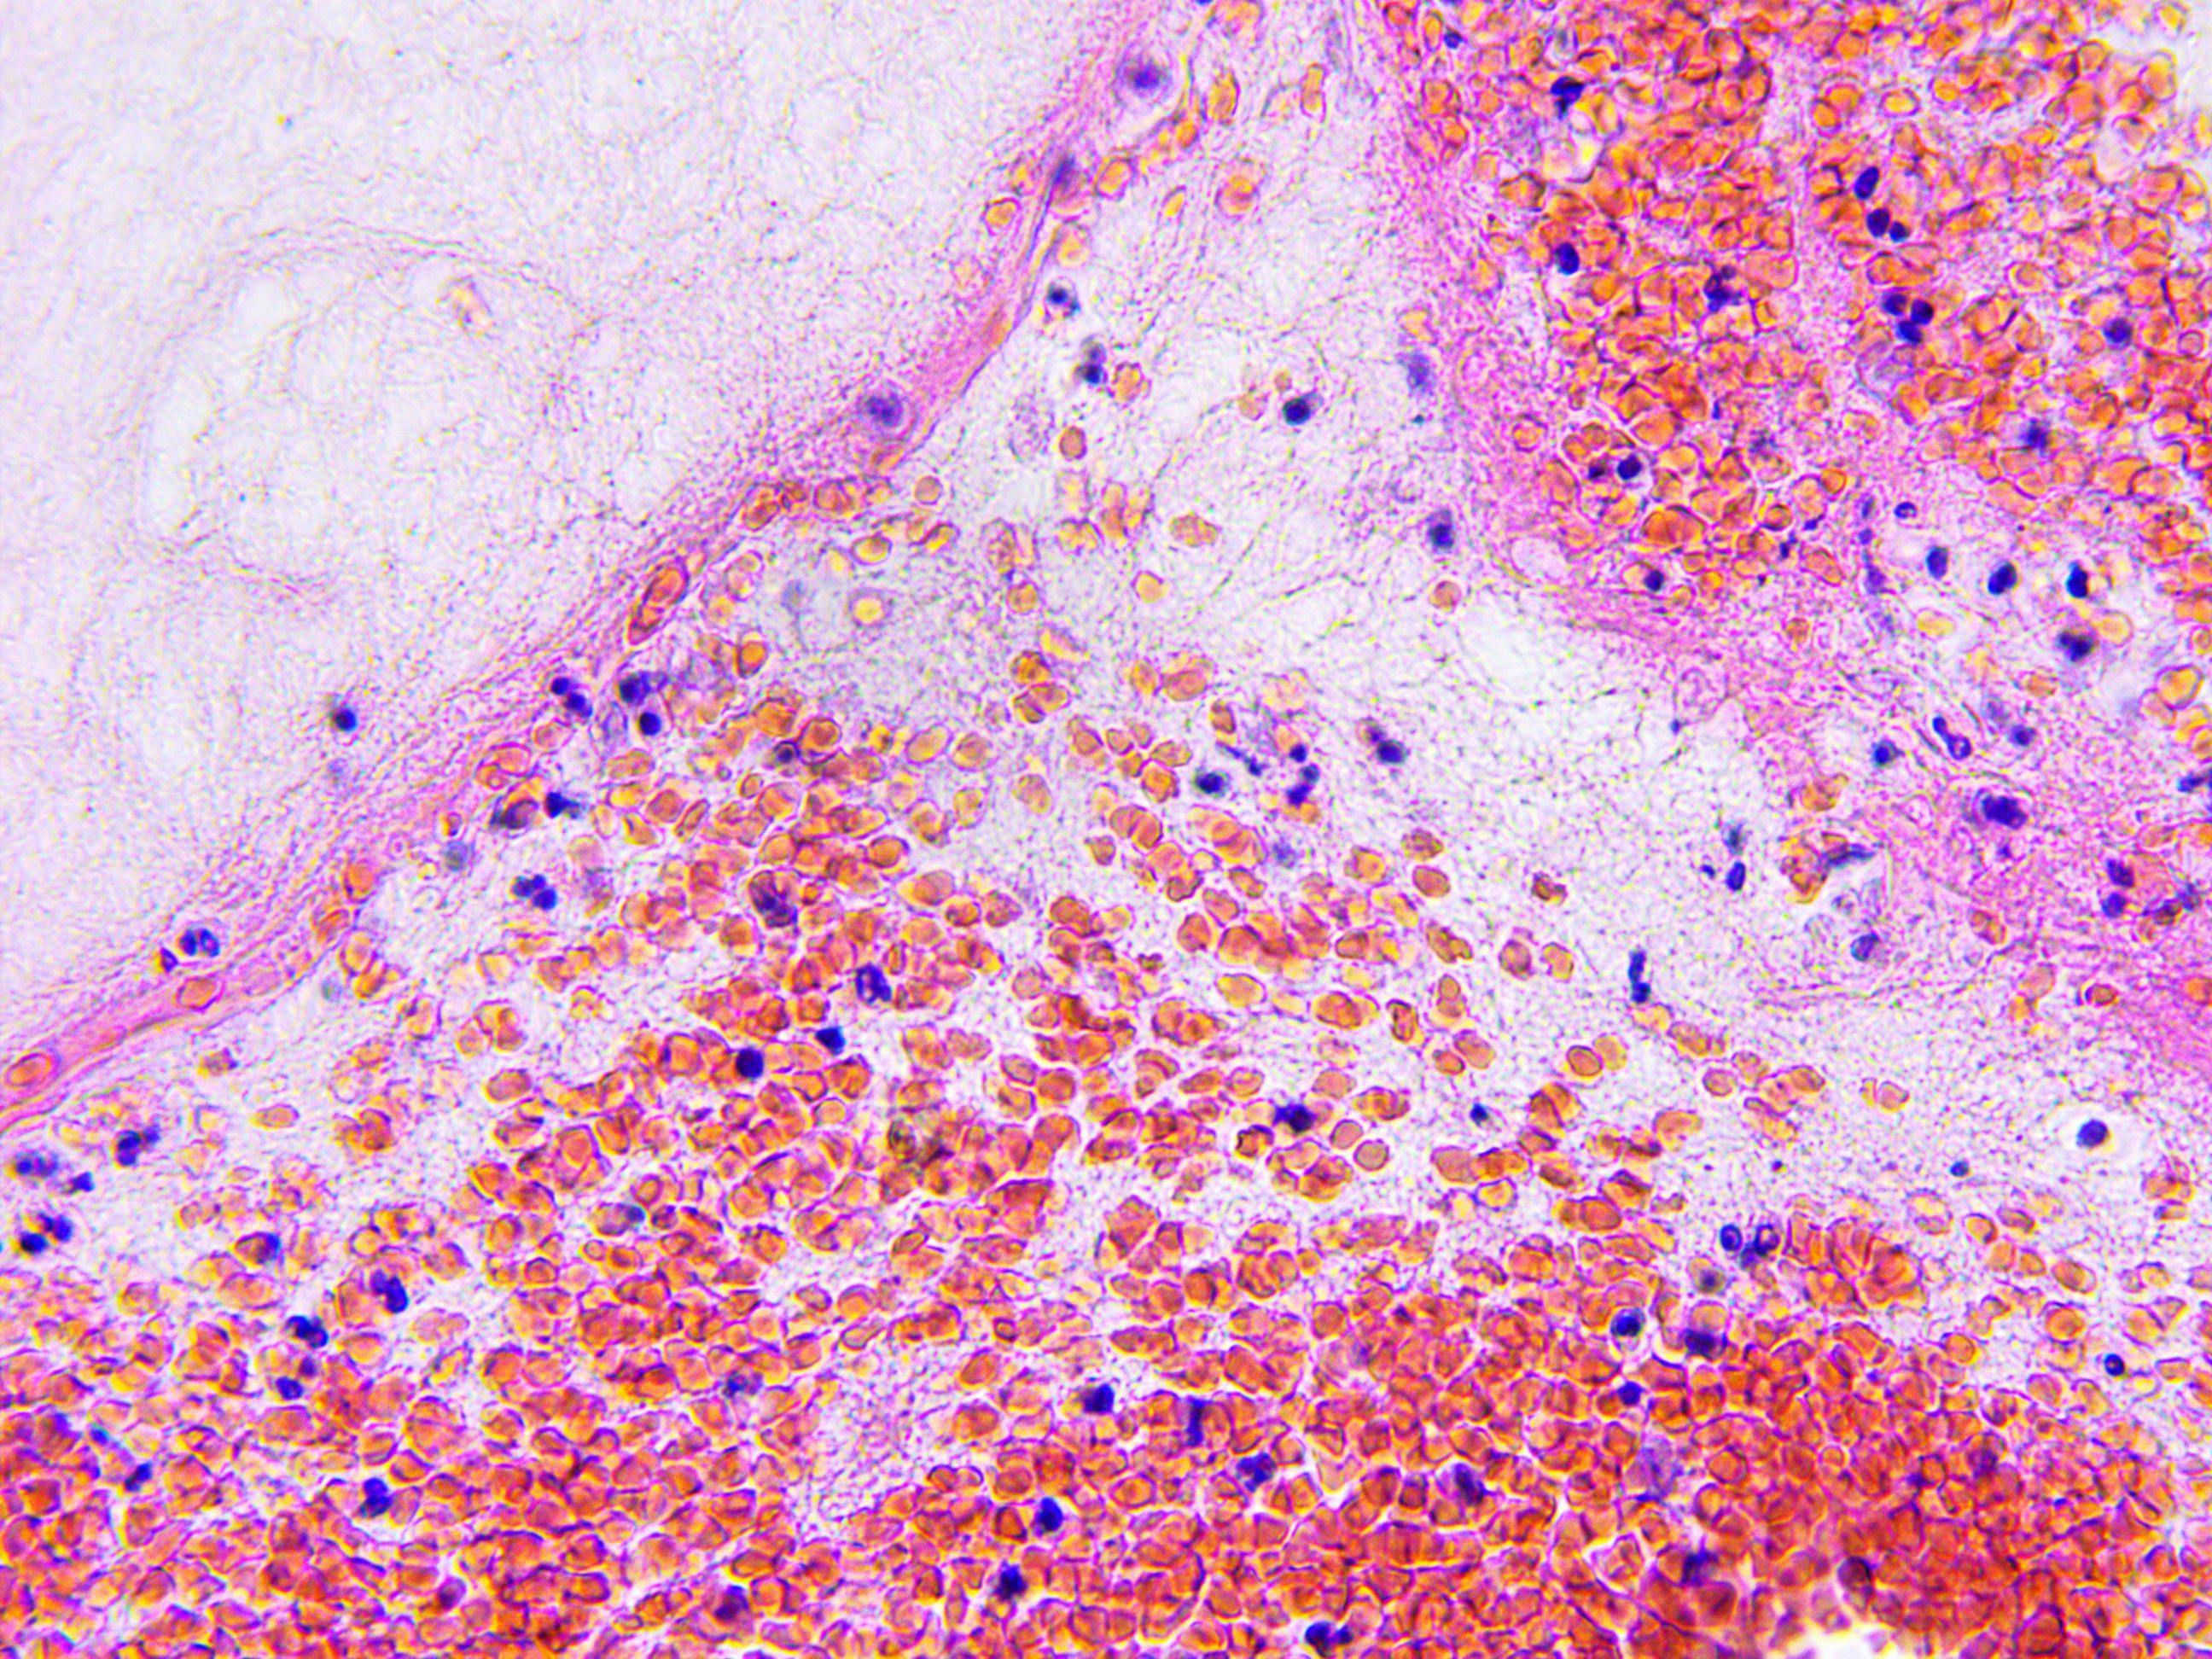 Brain tissue microscopic photography: ©lukszczepanski - stock.adobe.com